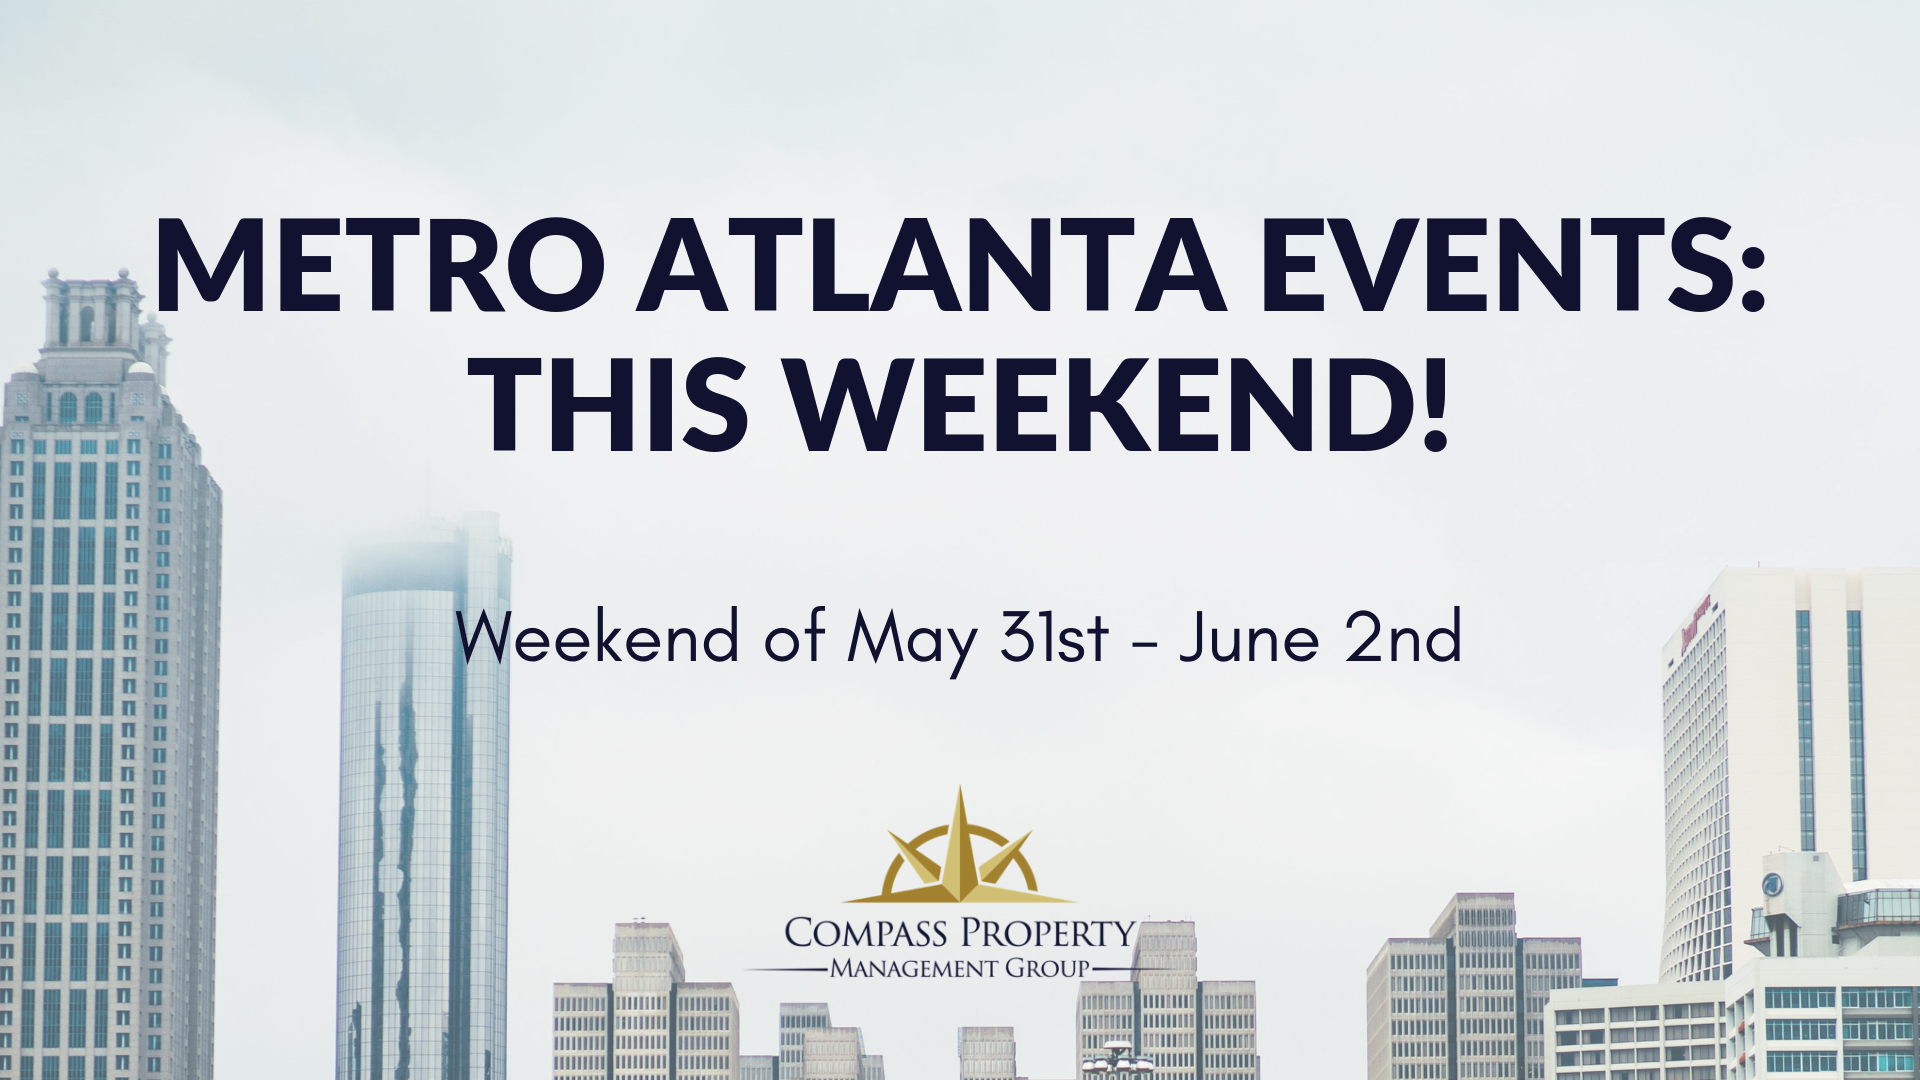 Metro Atlanta Events May 31 June 2, 2019 Compass Property Management